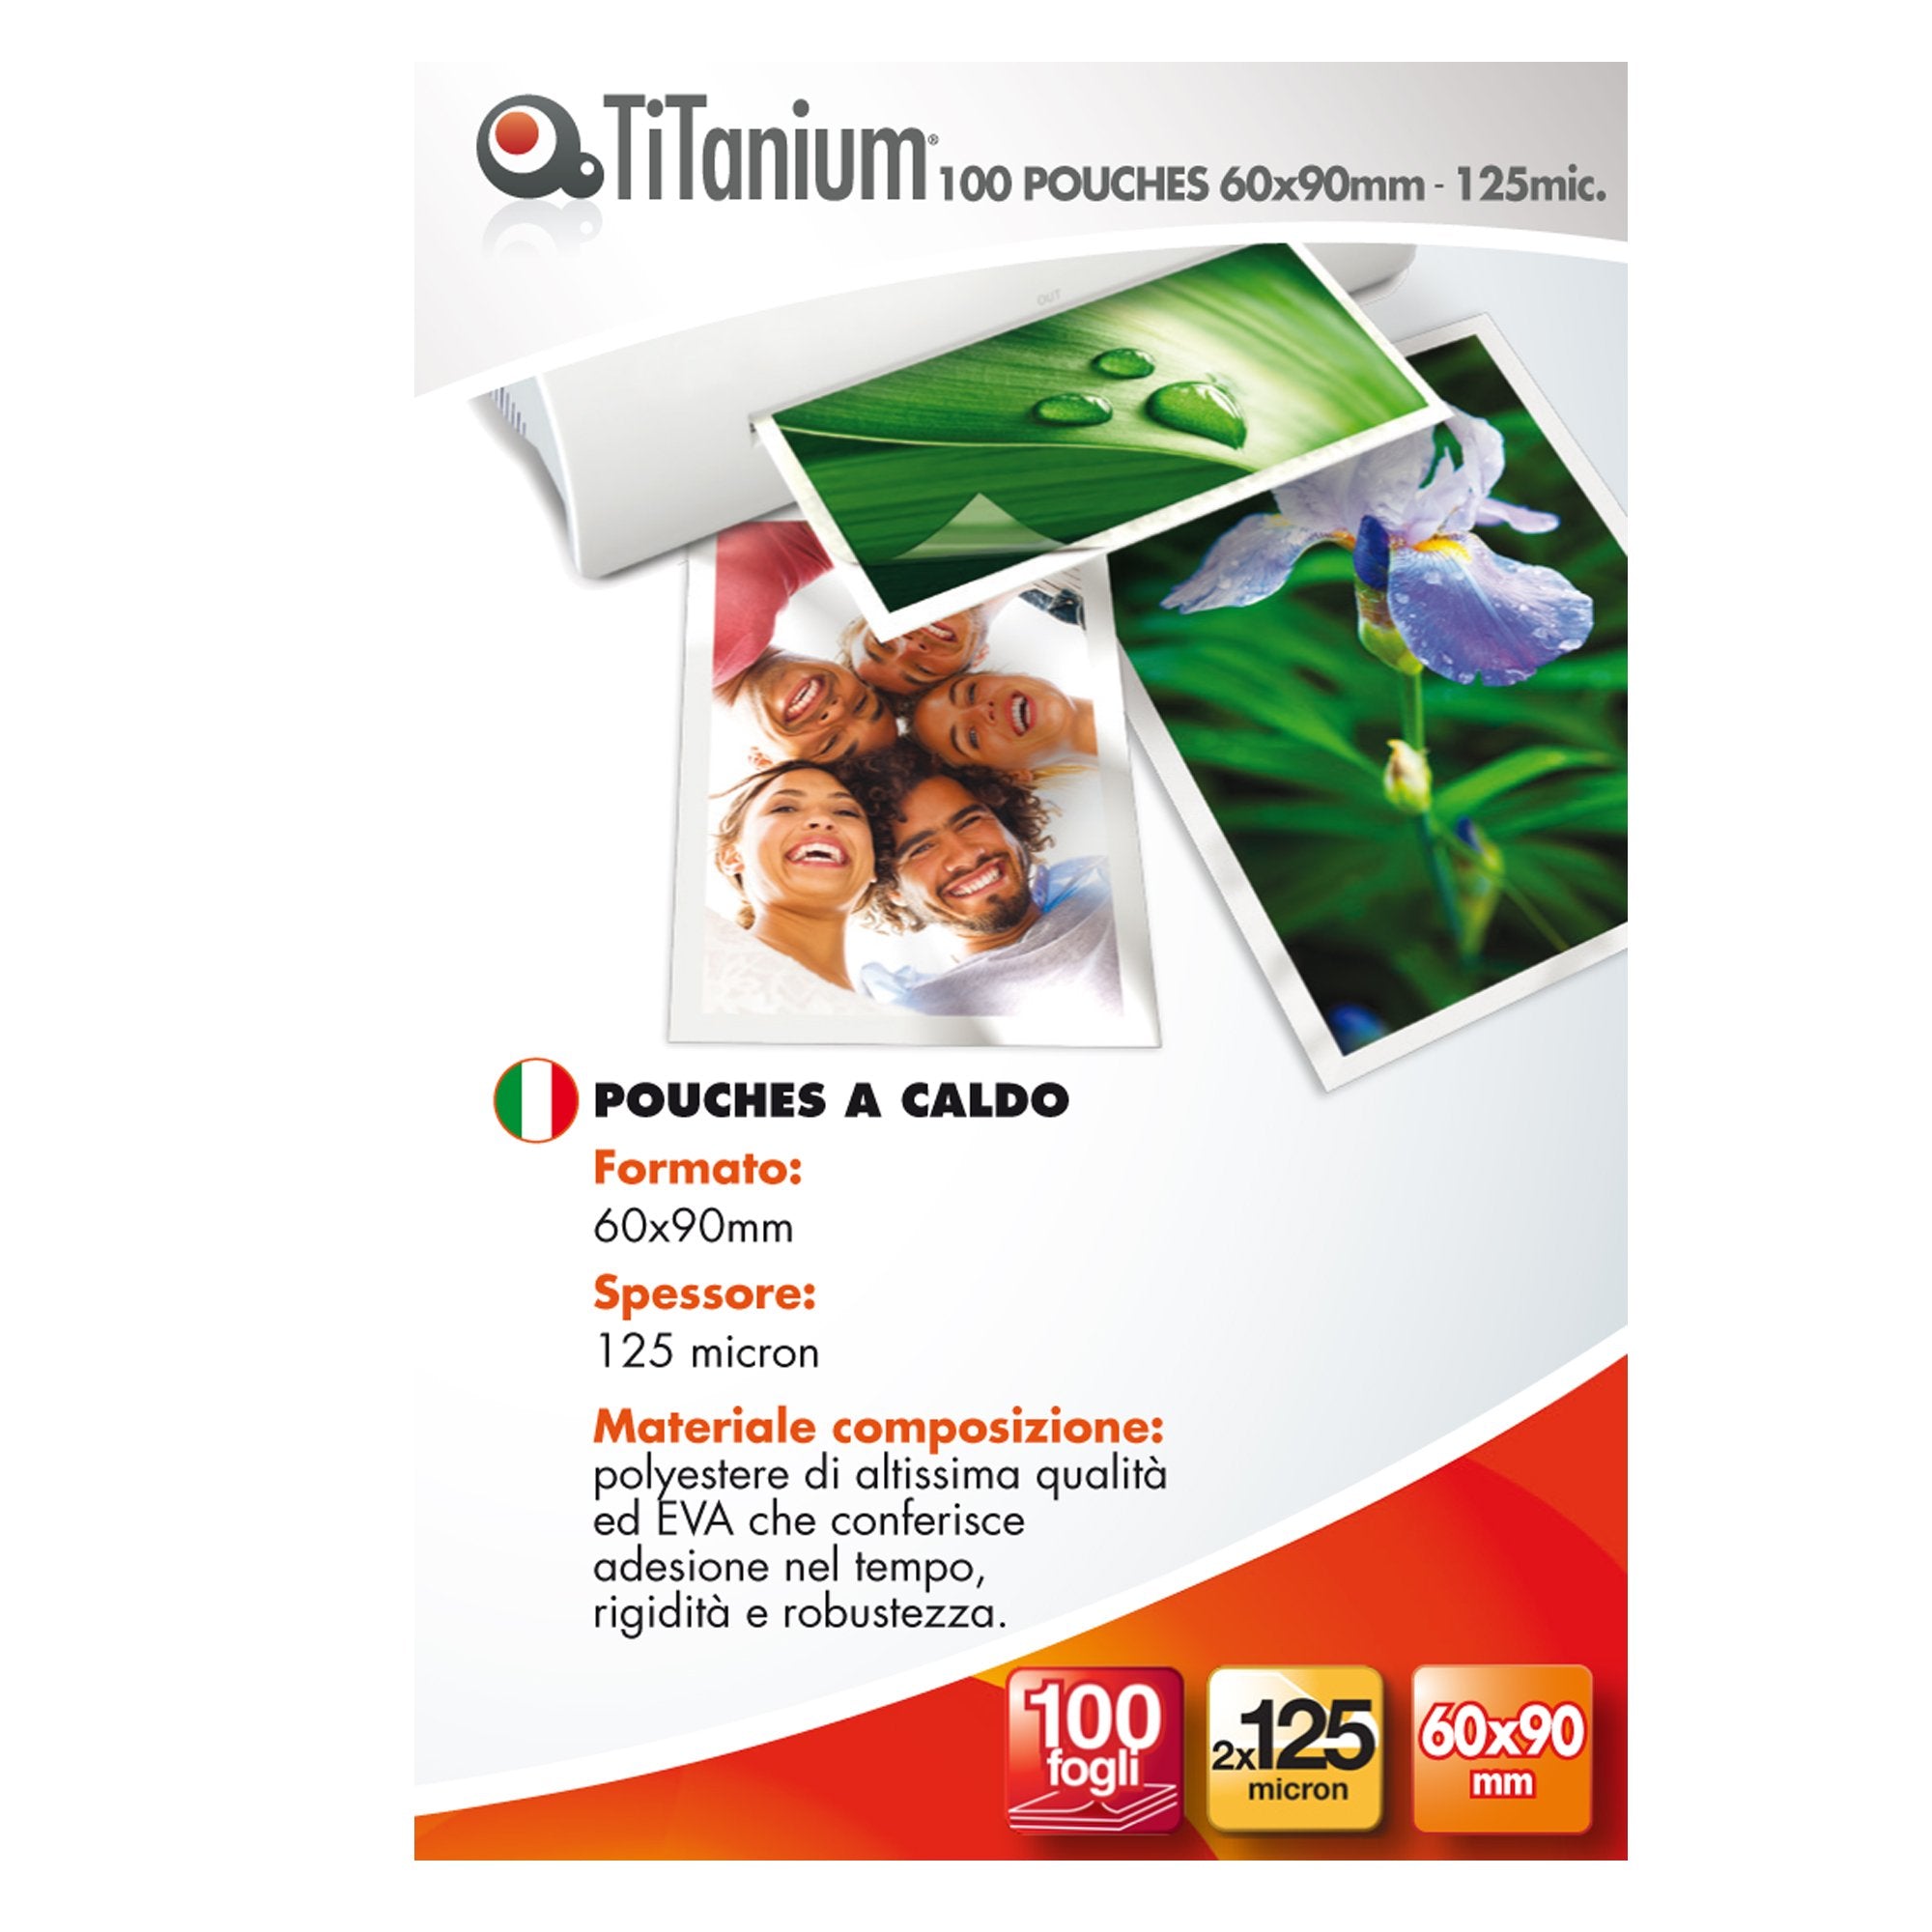 titanium-100-pouches-60x90mm-125my-business-card